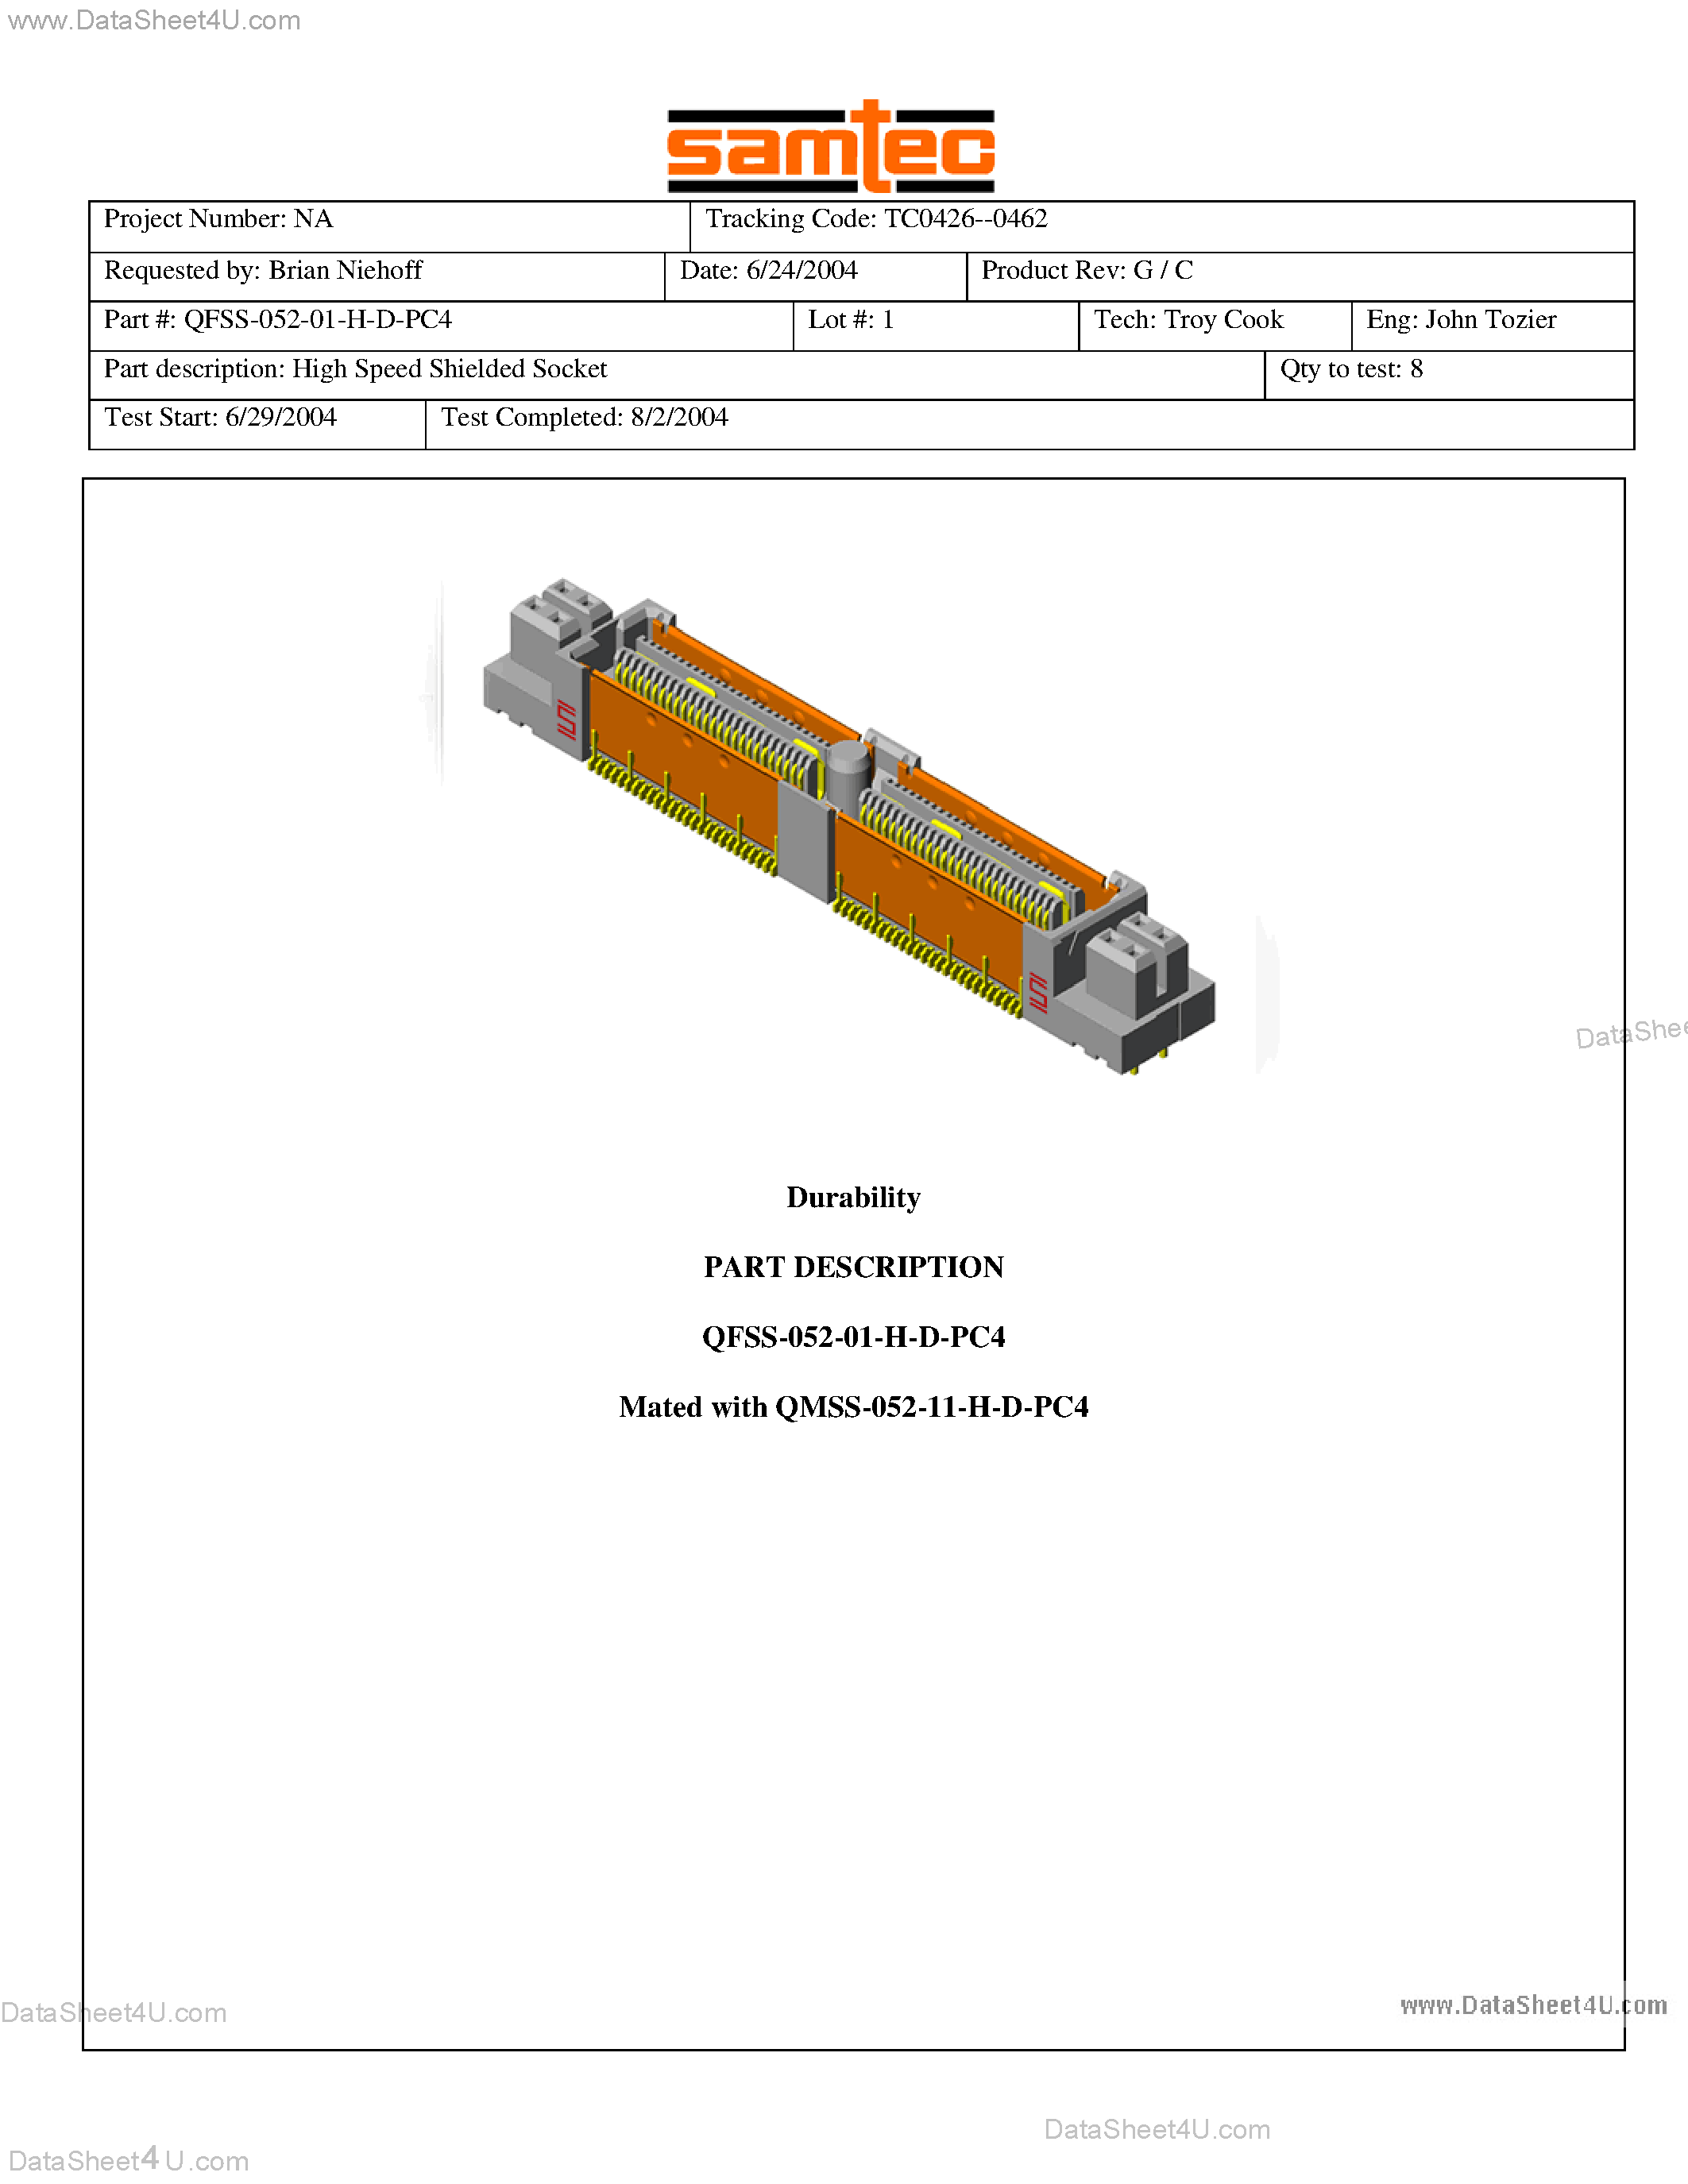 Даташит QFSS-052-01-H-D-A-PC4 - High Speed Shielded Socket страница 1